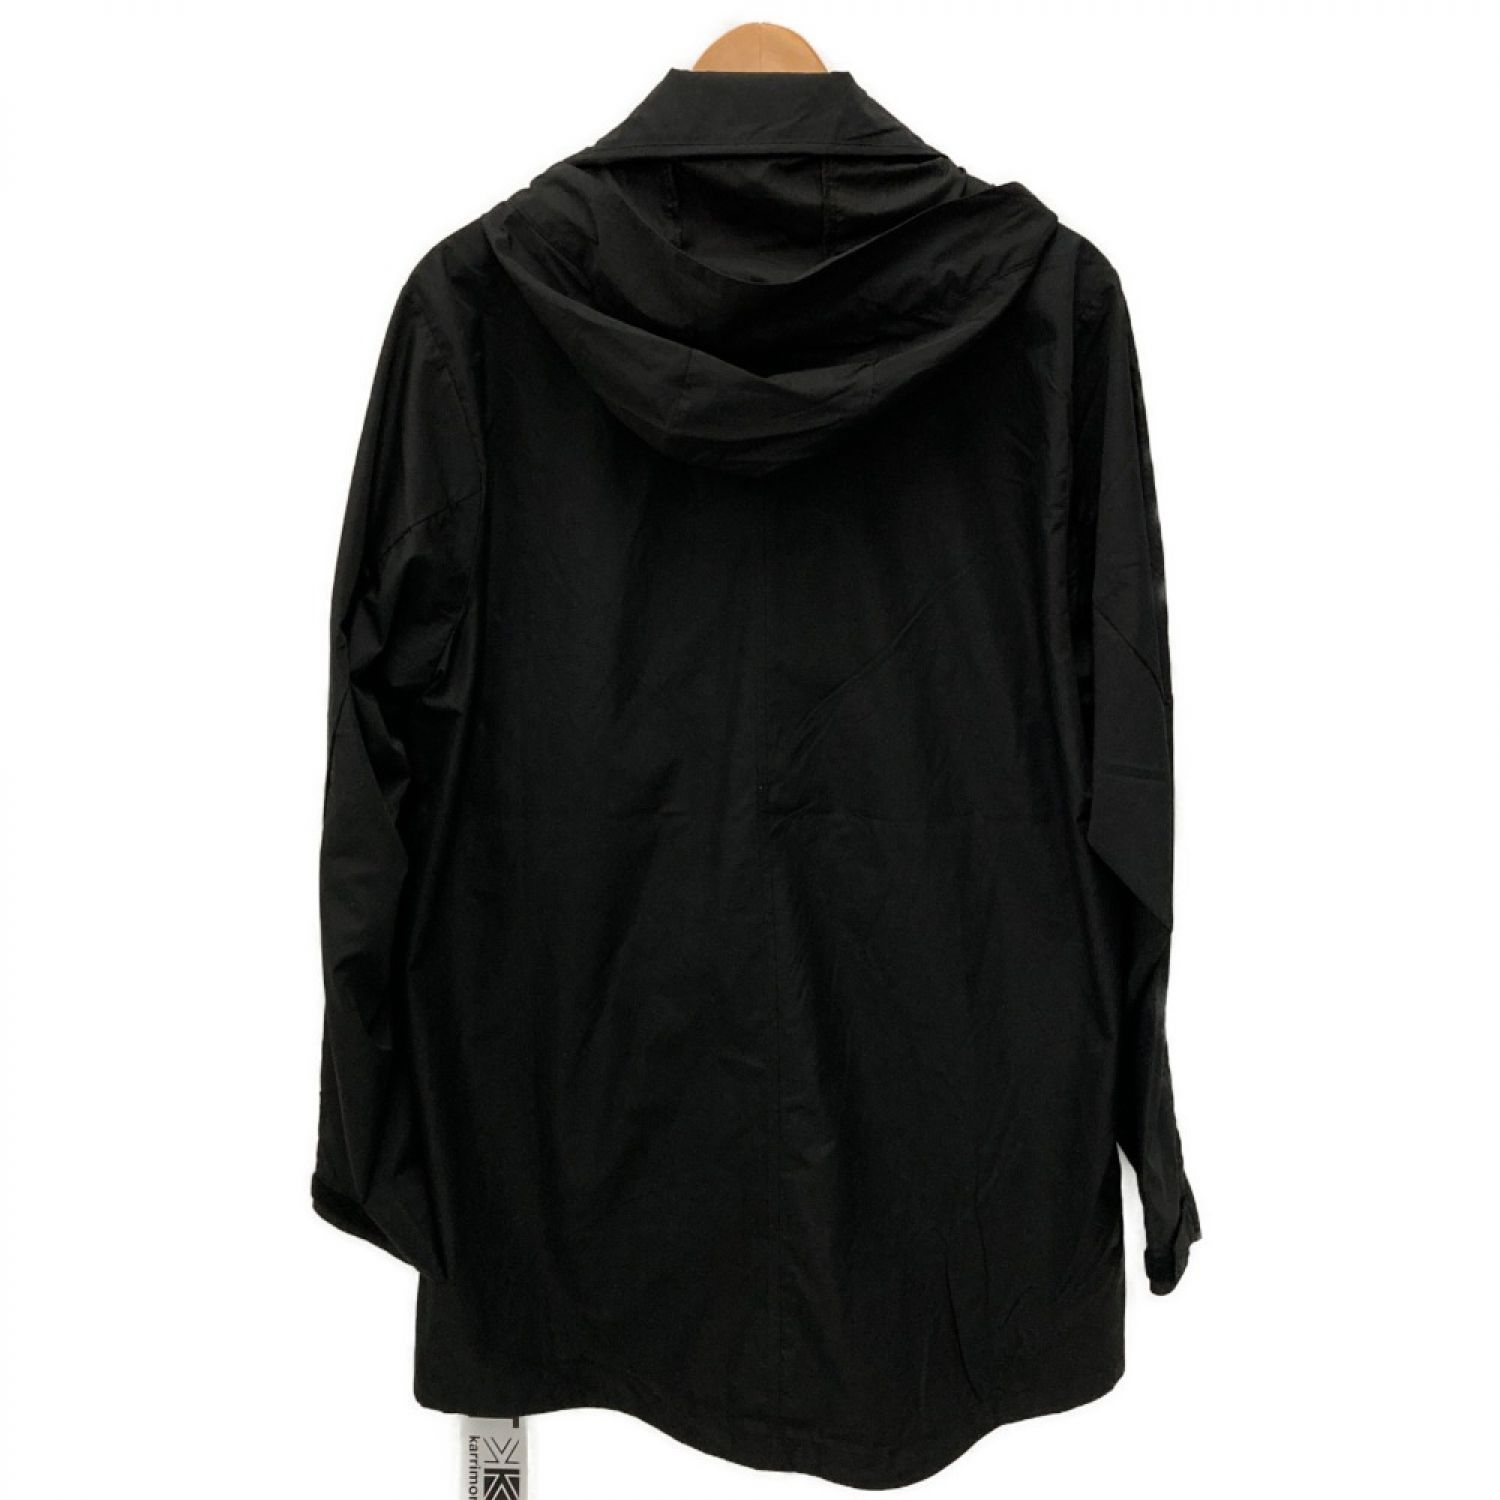 ☆☆Karrimor カリマ ワンダー コート wander coat ジャケット L メンズ 101105 ブラック